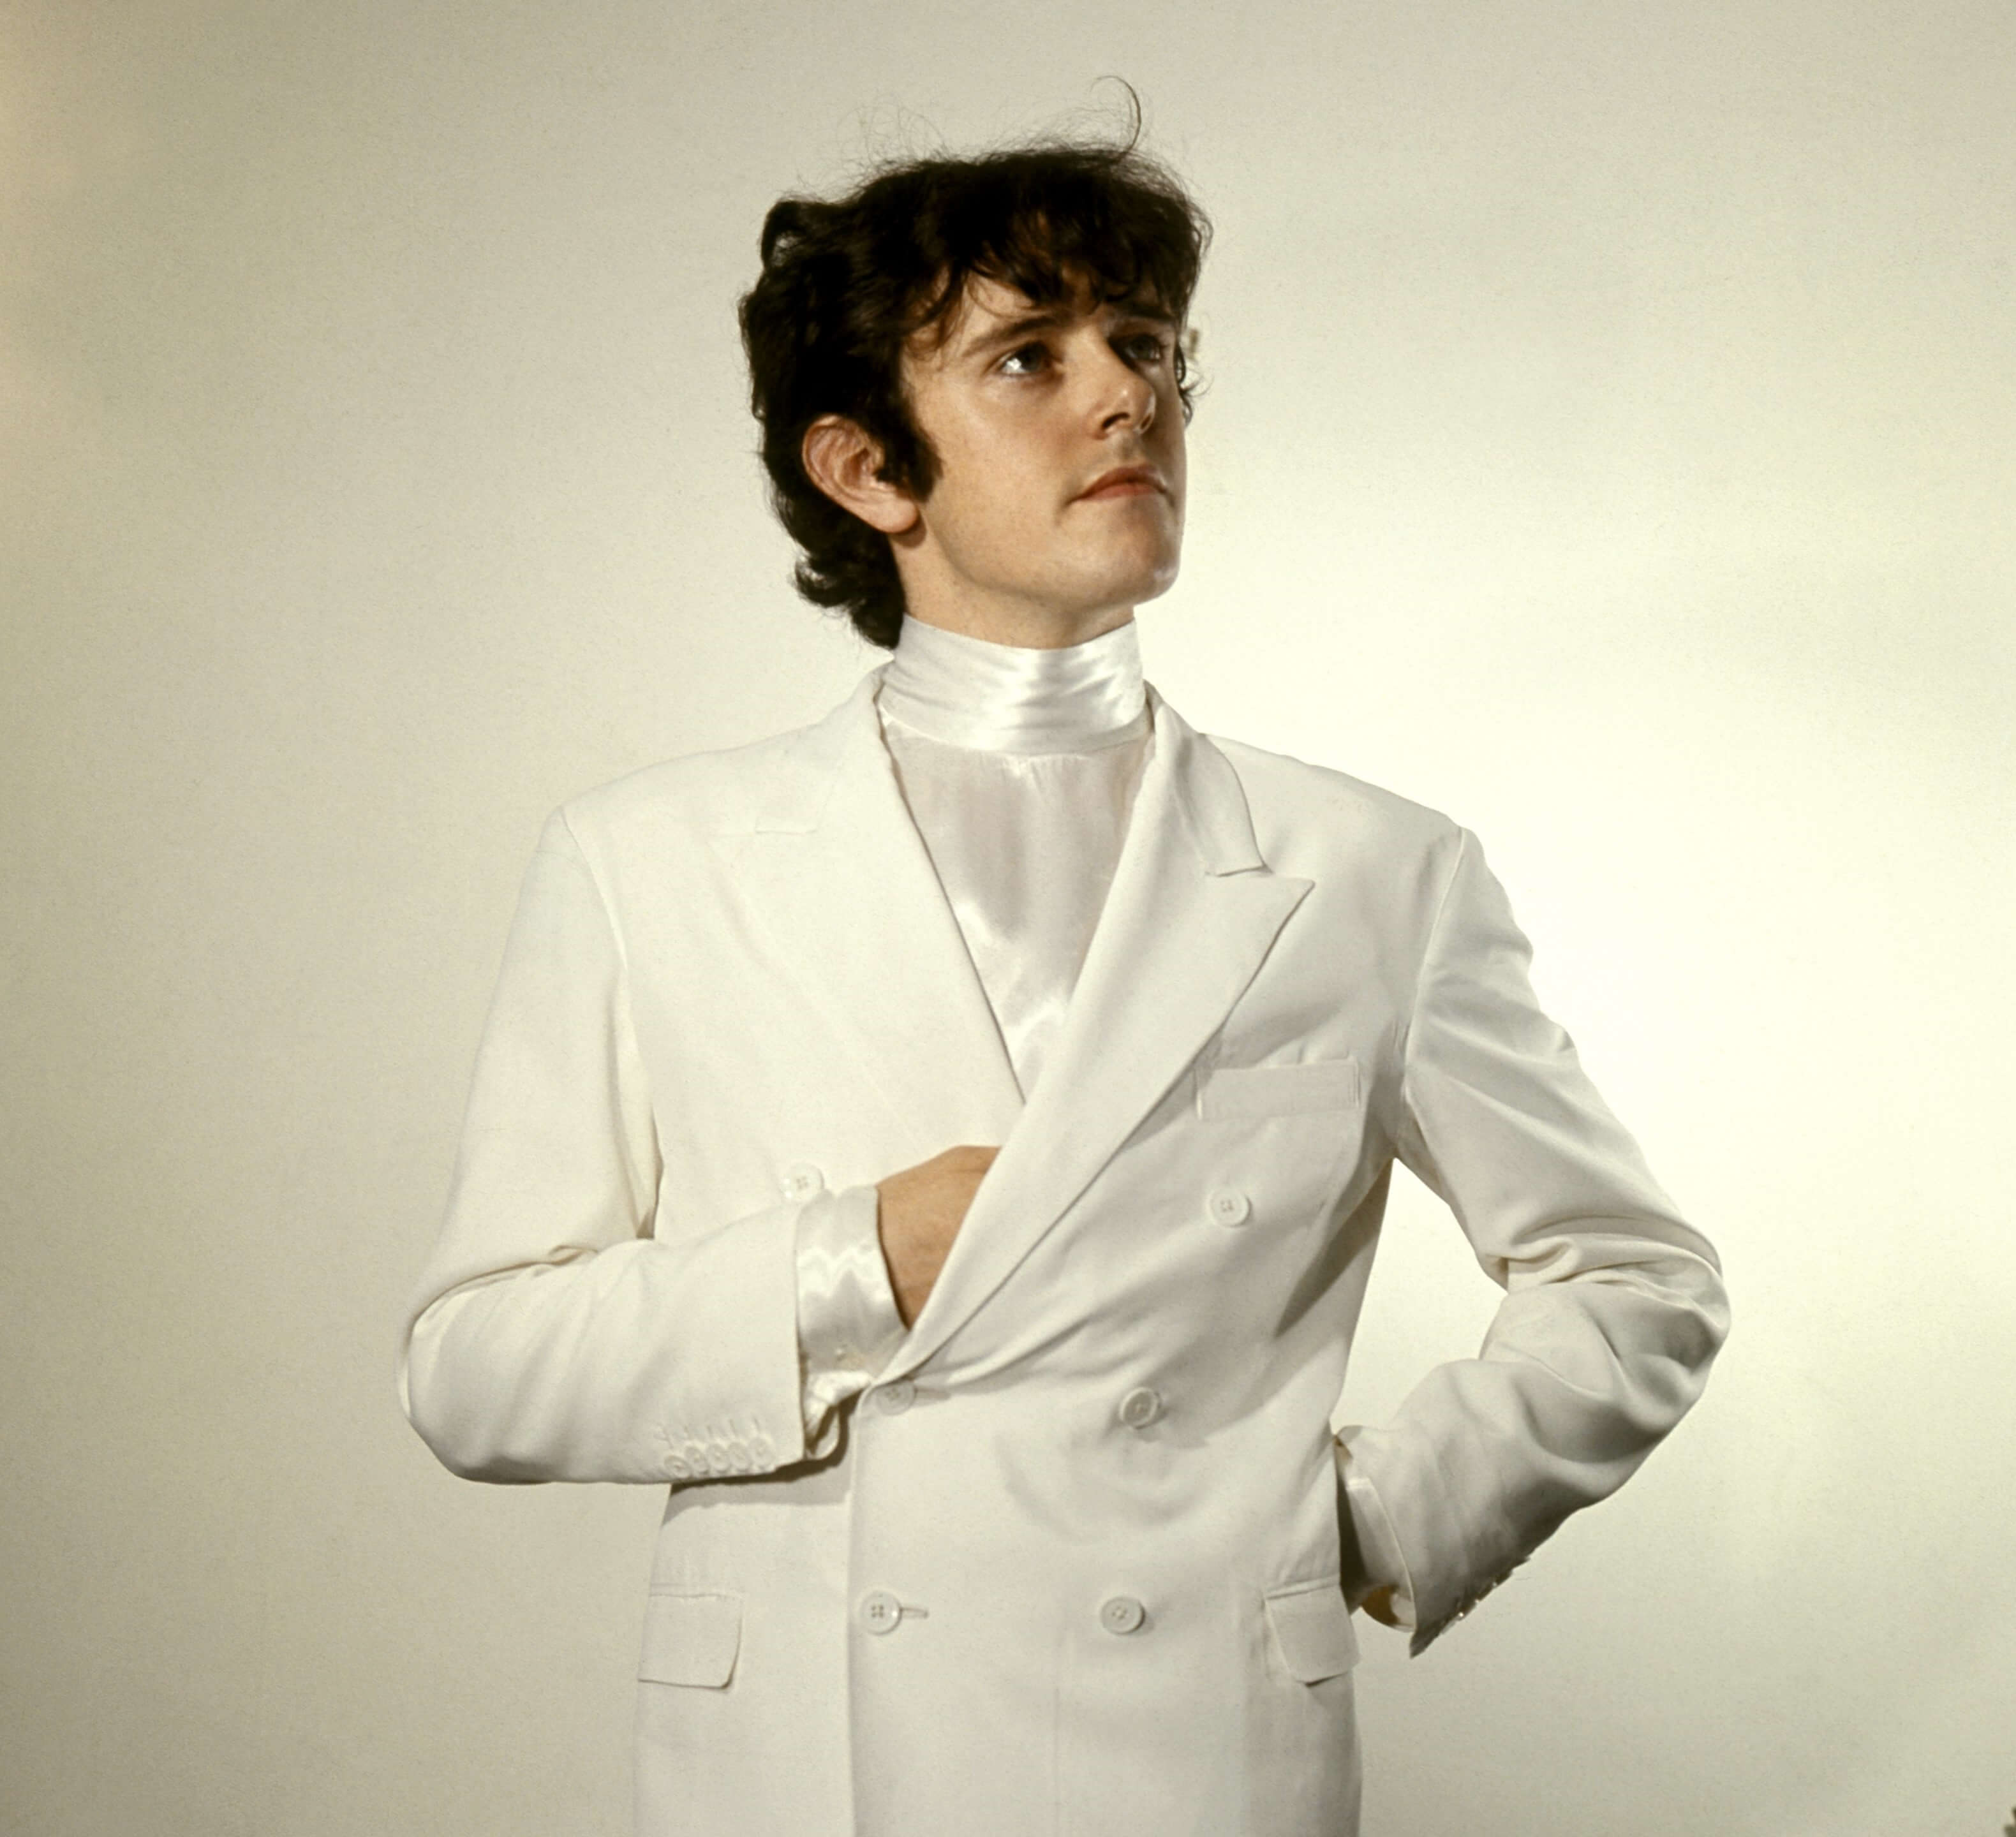 "Jennifer Juniper" singer Donovan in a white suit